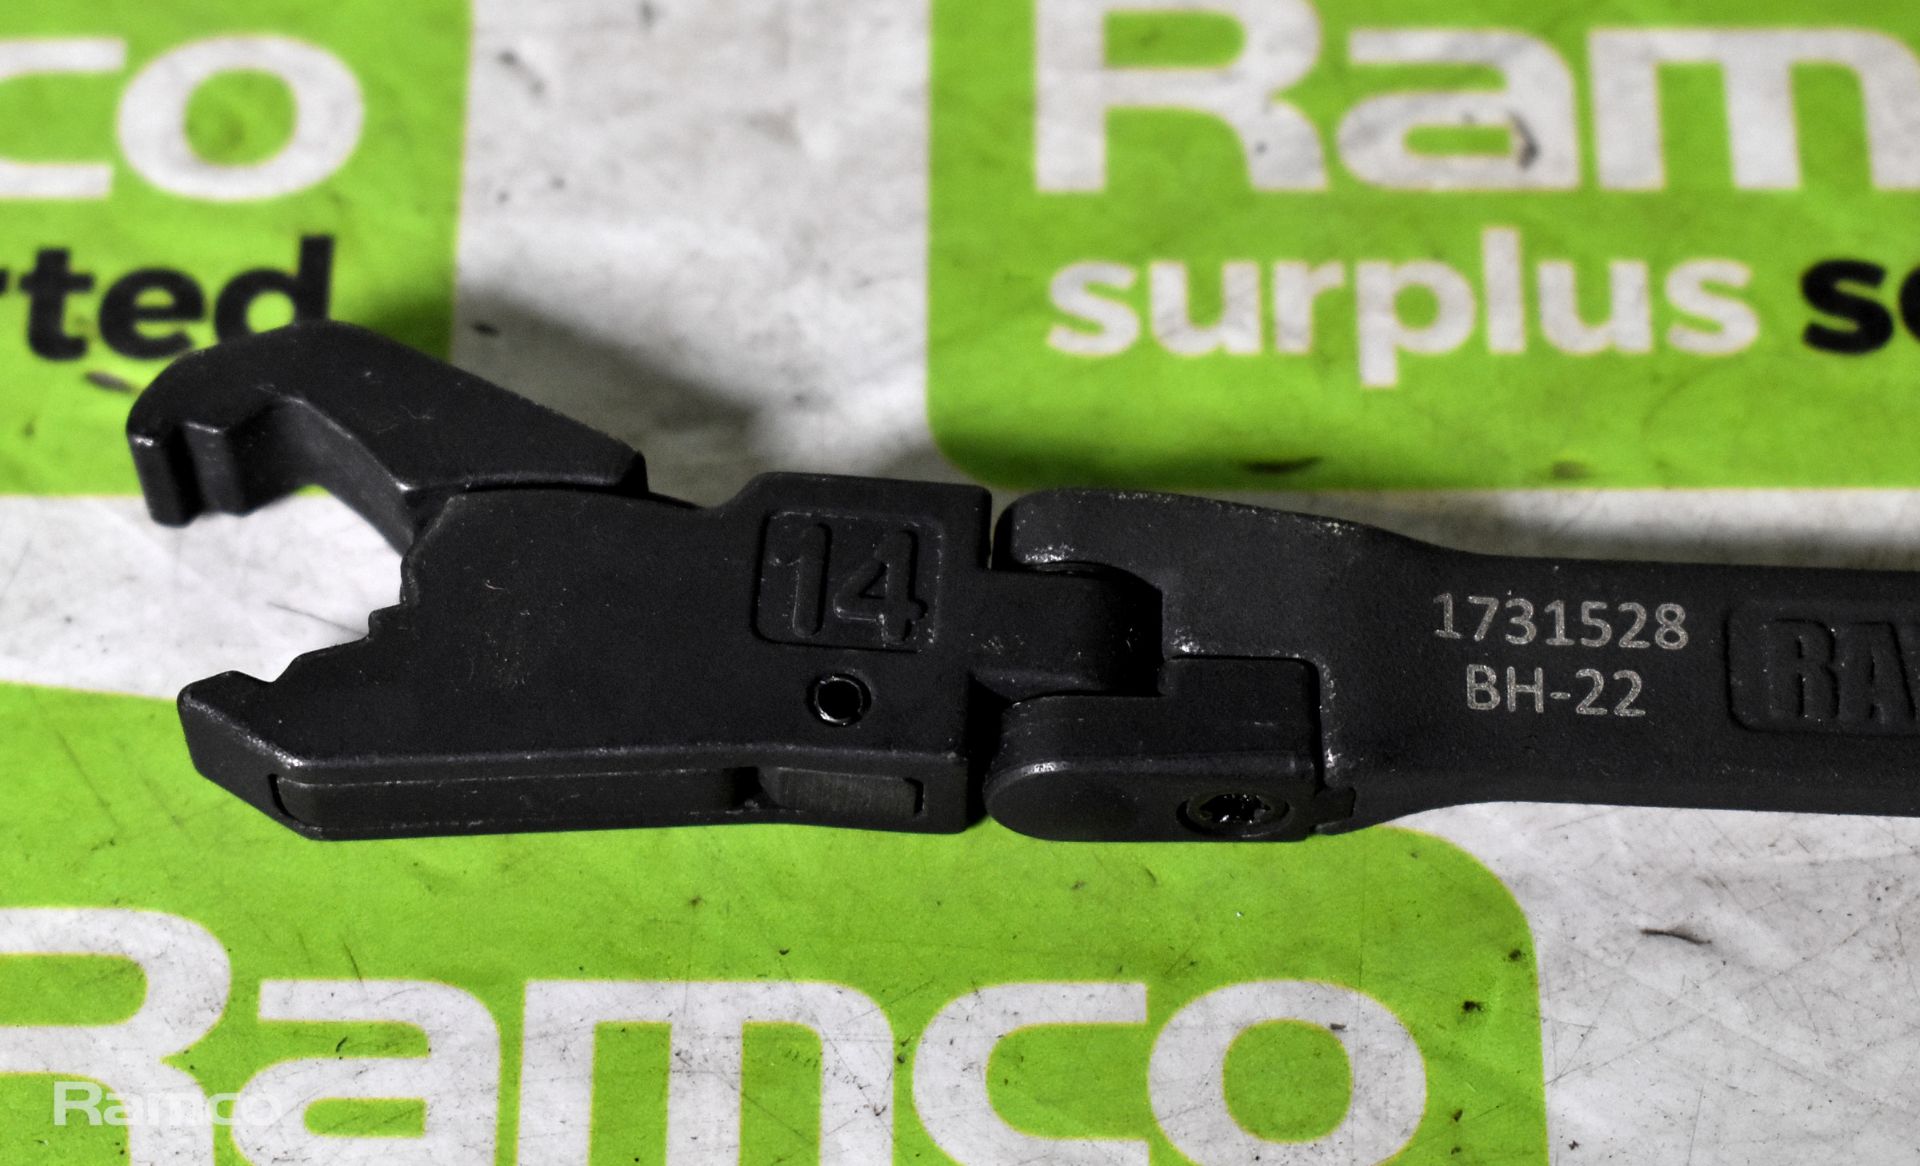 41x Ratchetech metric flex head open end ratchet spanners - 14 mm Black - Image 3 of 4